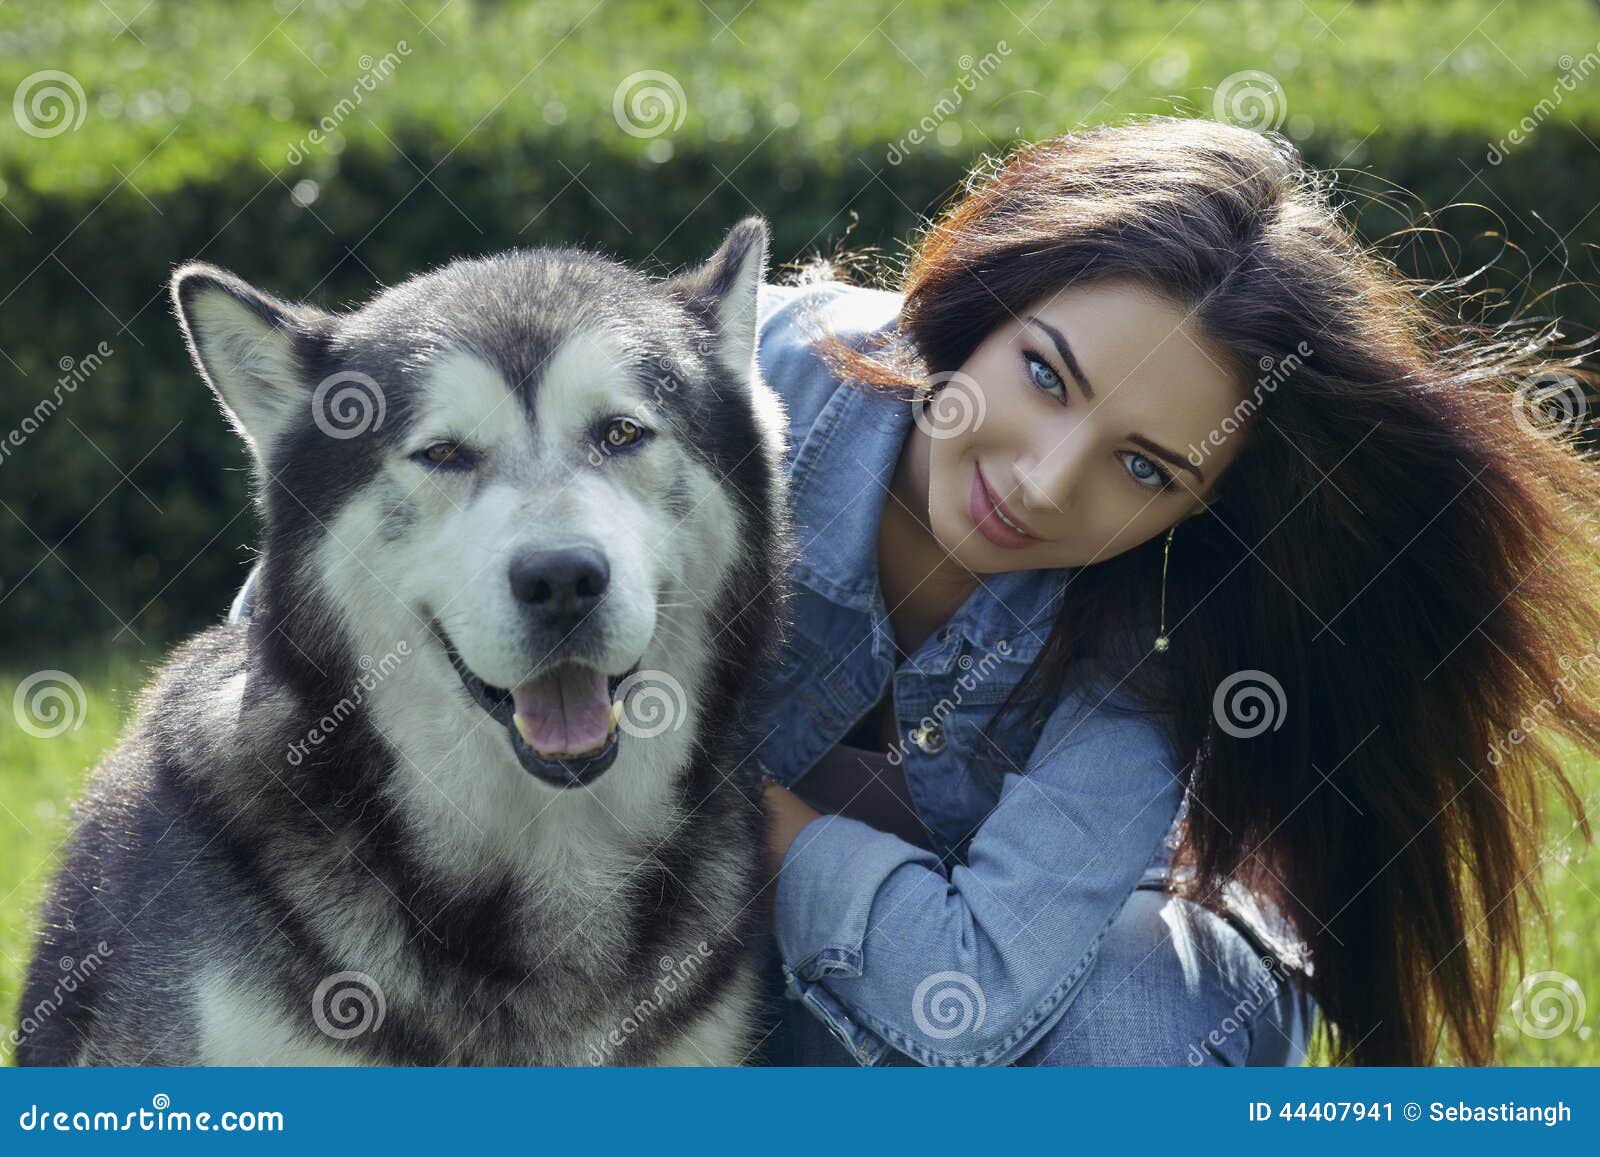 beautiful-woman-malamute-dog-portrait-young-lady-blue-eyes-long-hair-wearing-blue-jeans-posing-big-alaskan-male-44407941.jpg